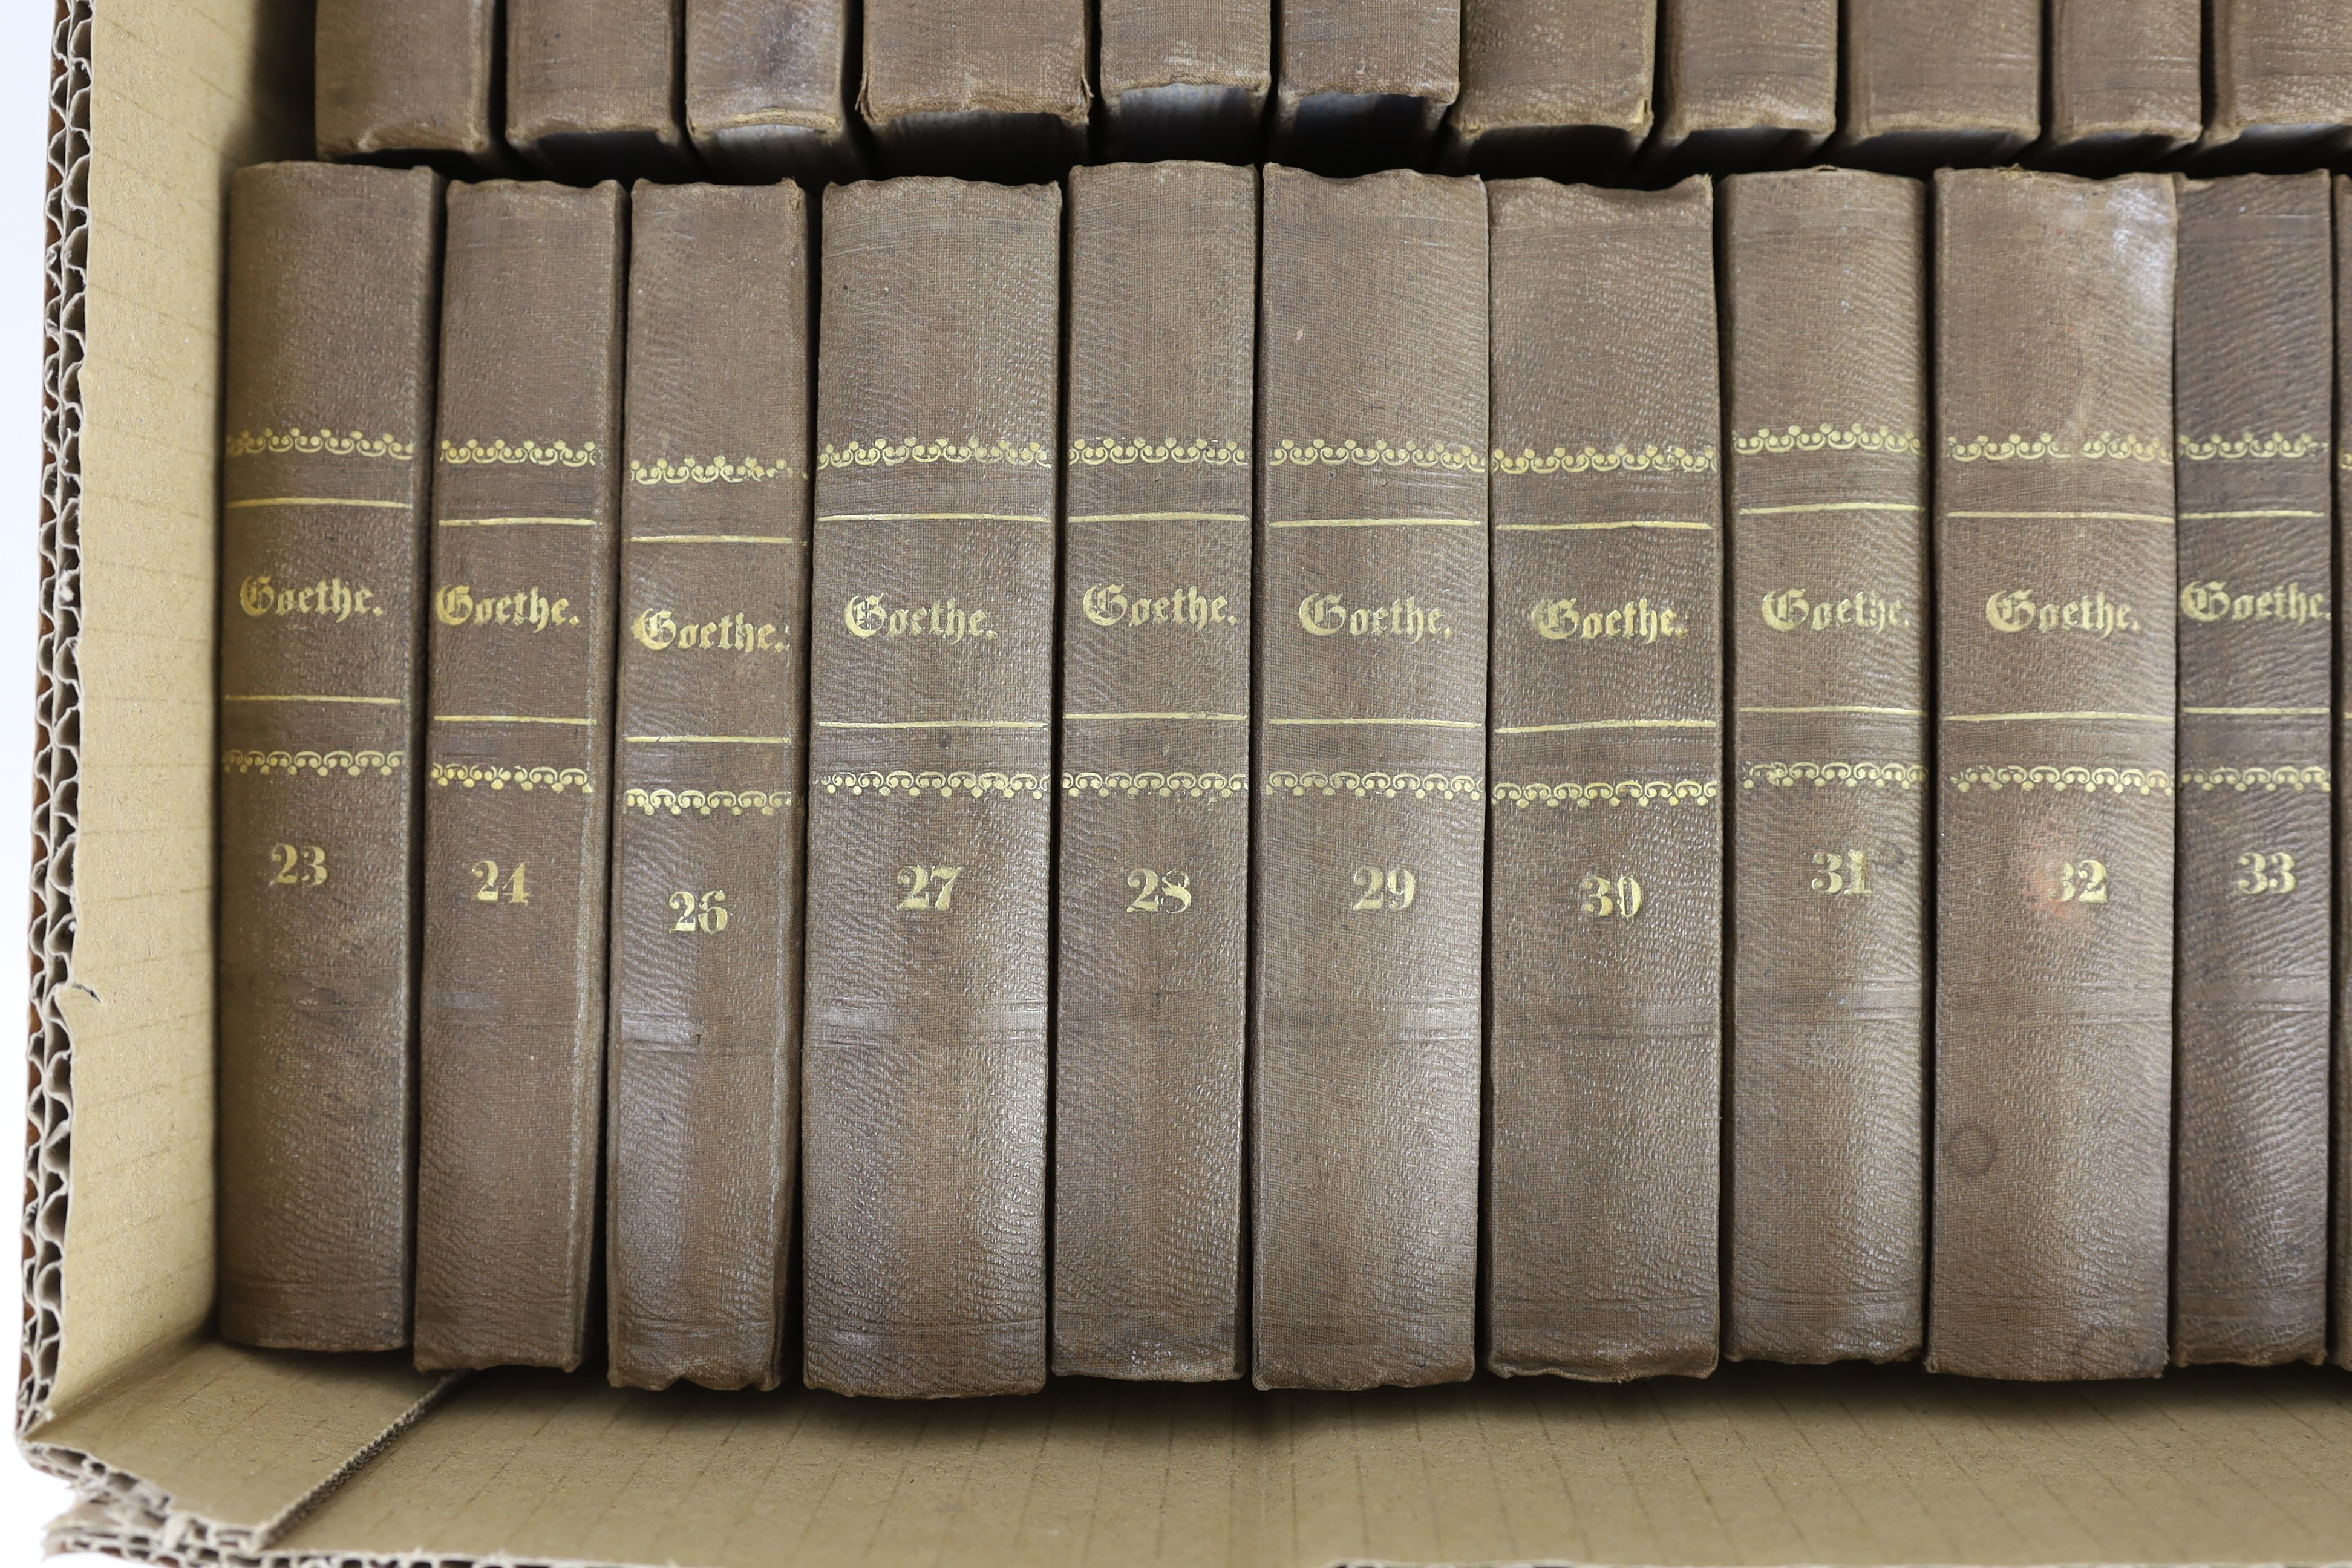 Goethe, Johanna Wolfgang - The Works in German, 35 vols (of 40), 12mo, half cloth, gilt embossed spines, Cotta’scher Verlag, Stuttgart and Augsburg, 1855